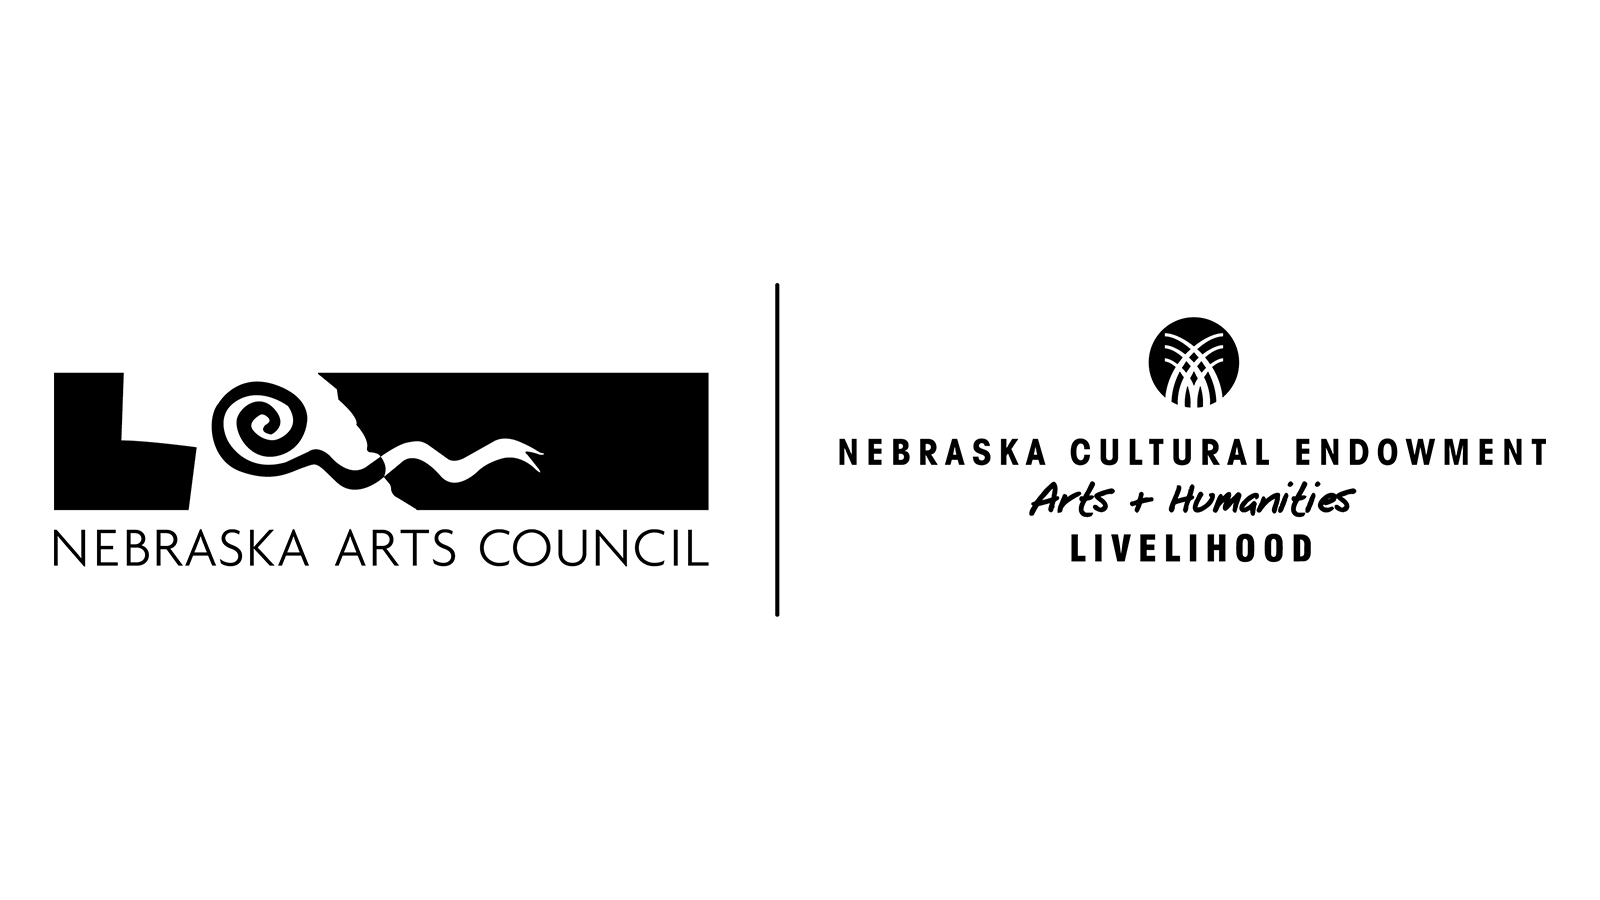 Nebraska Arts Council logos; links to news story